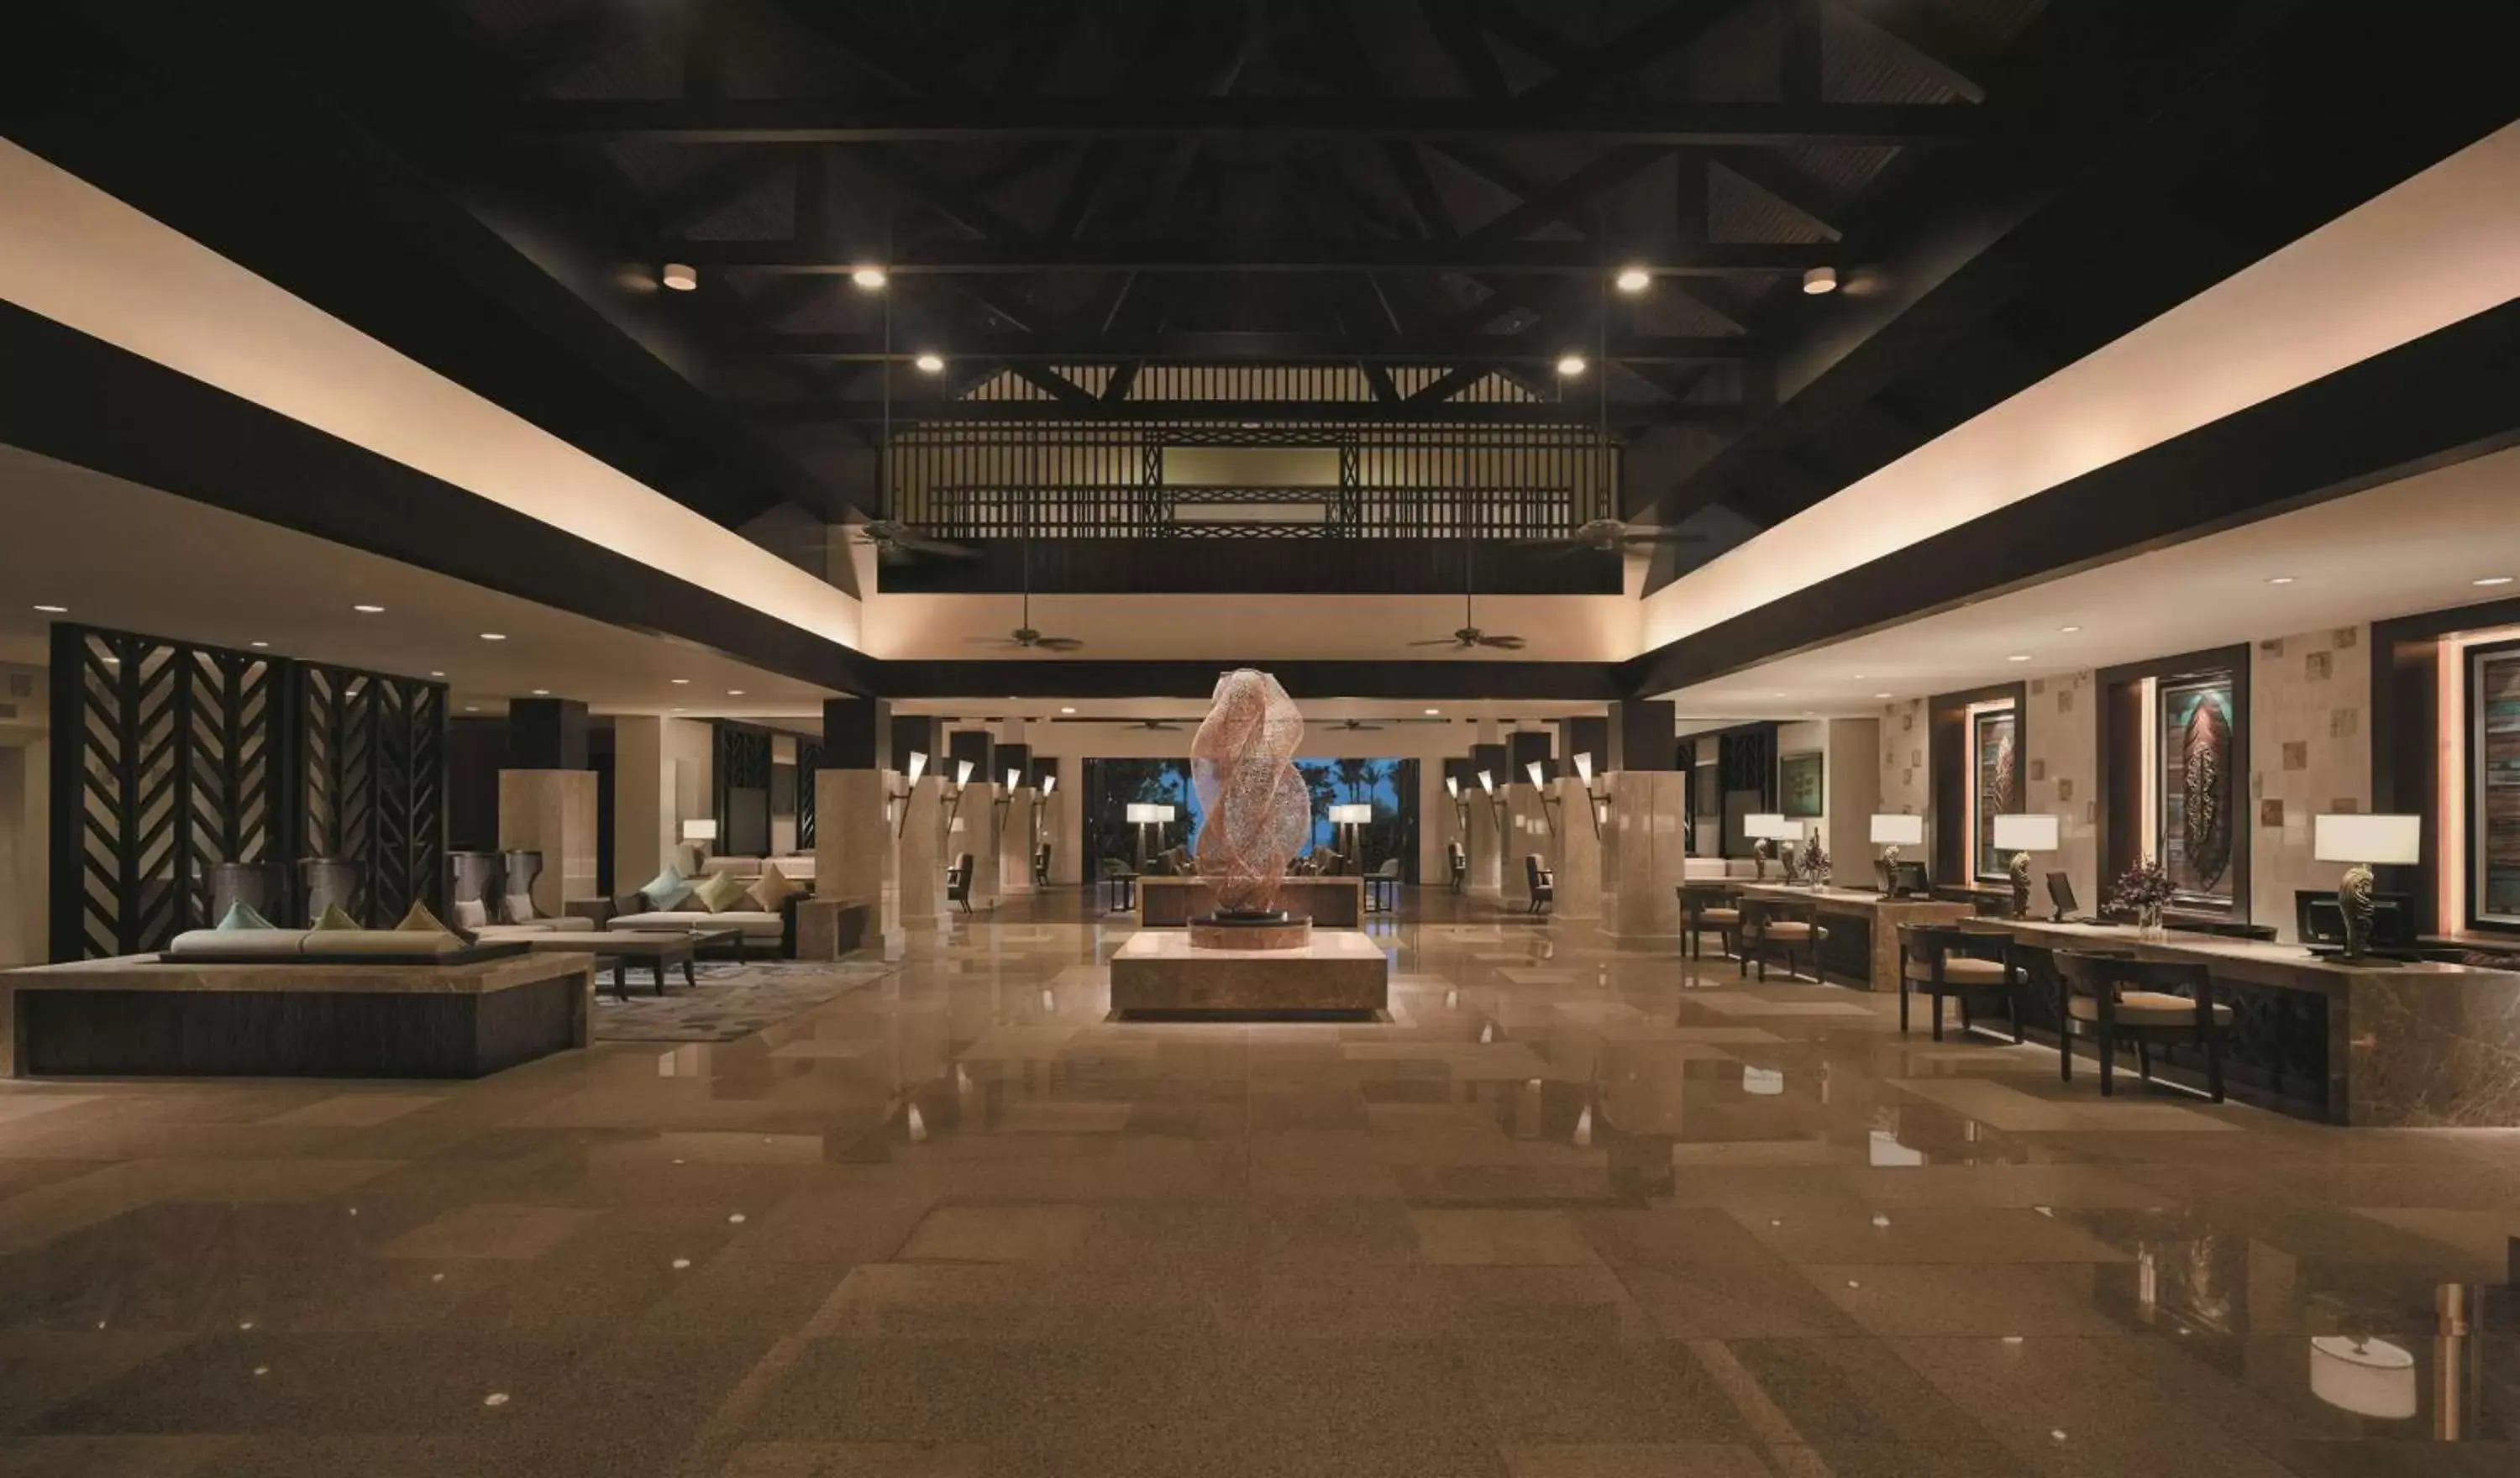 Lobby or reception in Shangri-La Rasa Ria, Kota Kinabalu